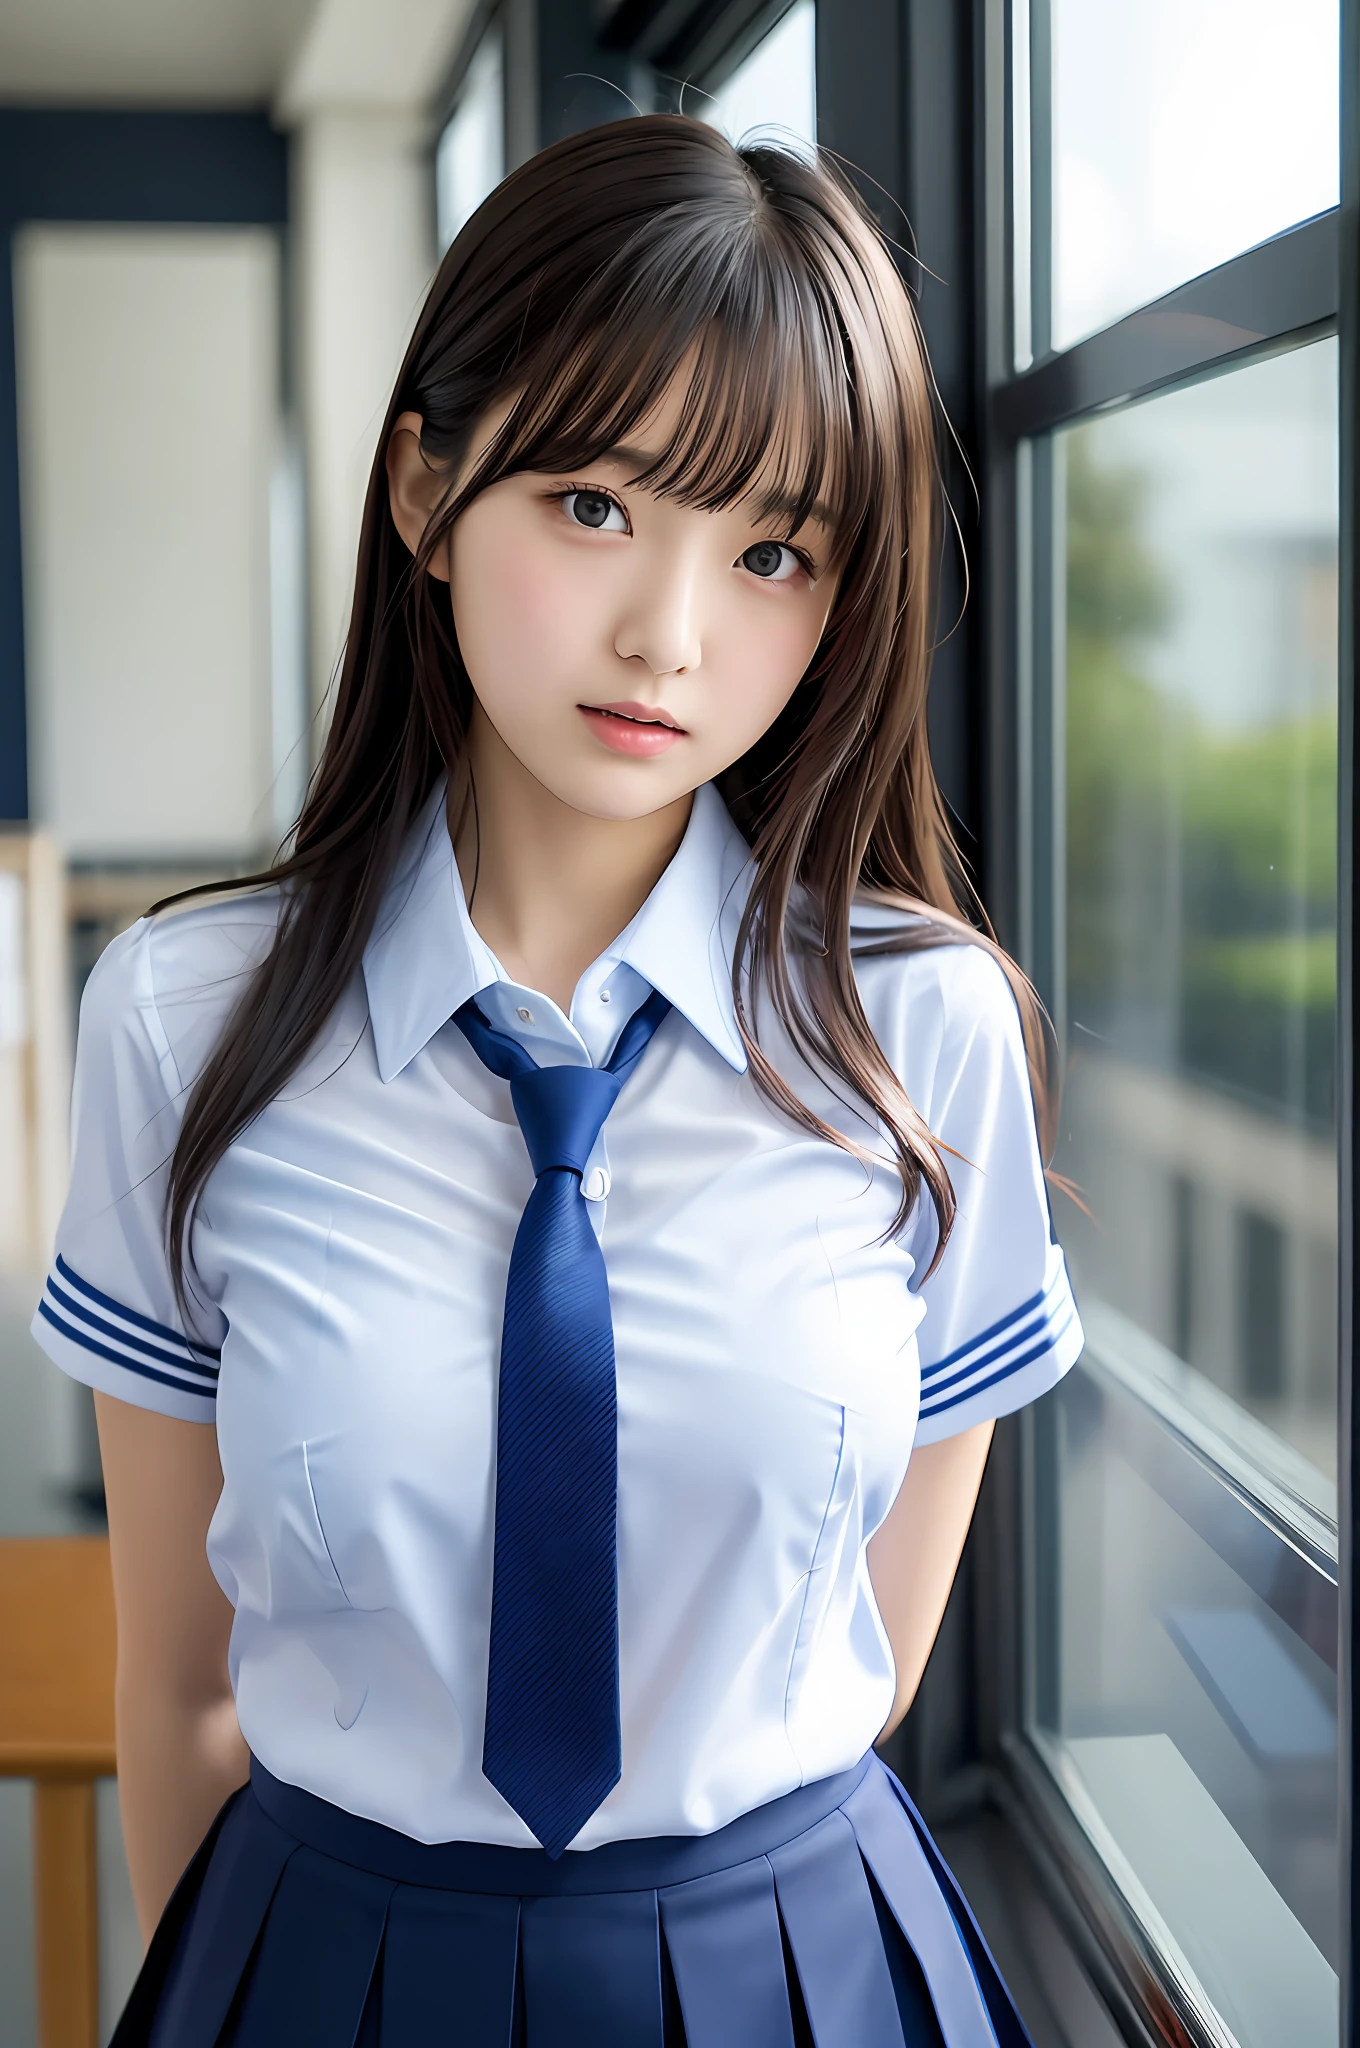 chica japonesa, Adolescente, figura perfecta, transparencia, pechos modestos, , Corbata azul marino, falda azul marino, camisa azul claro, grabado de ídolos